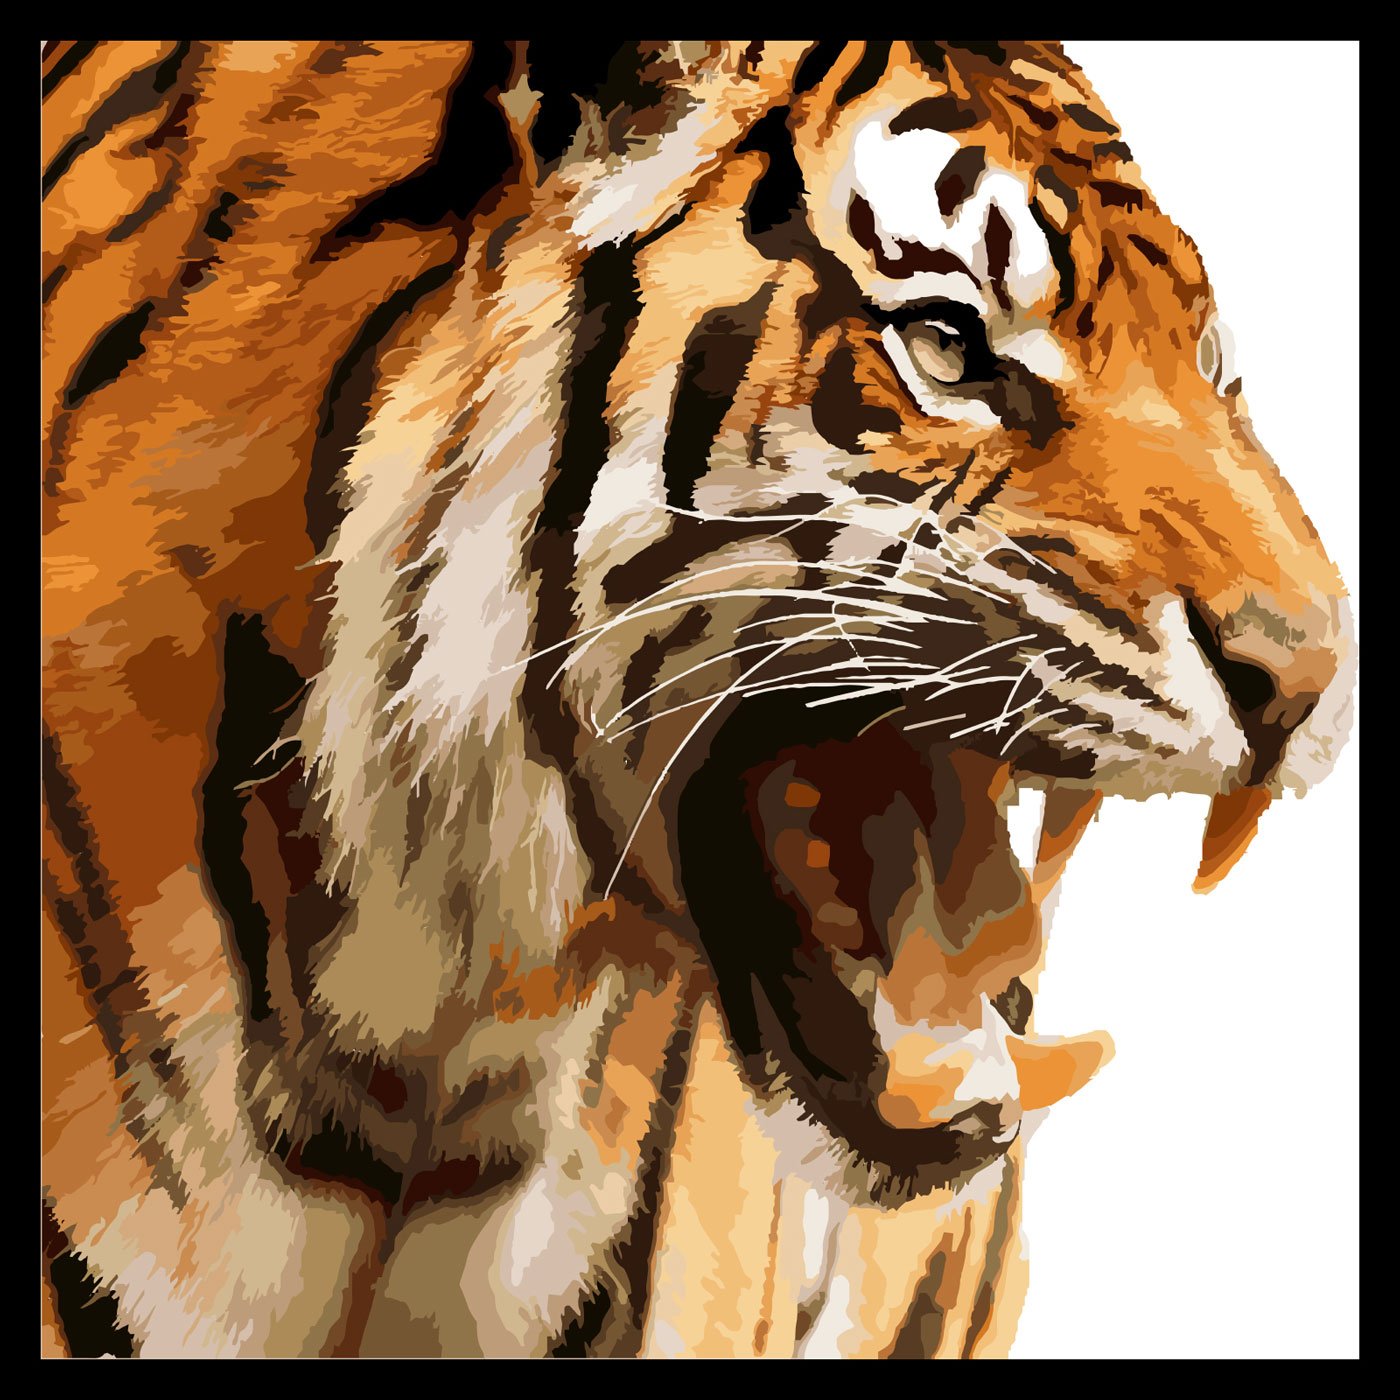 Painel fotográfico tigre – City Decor